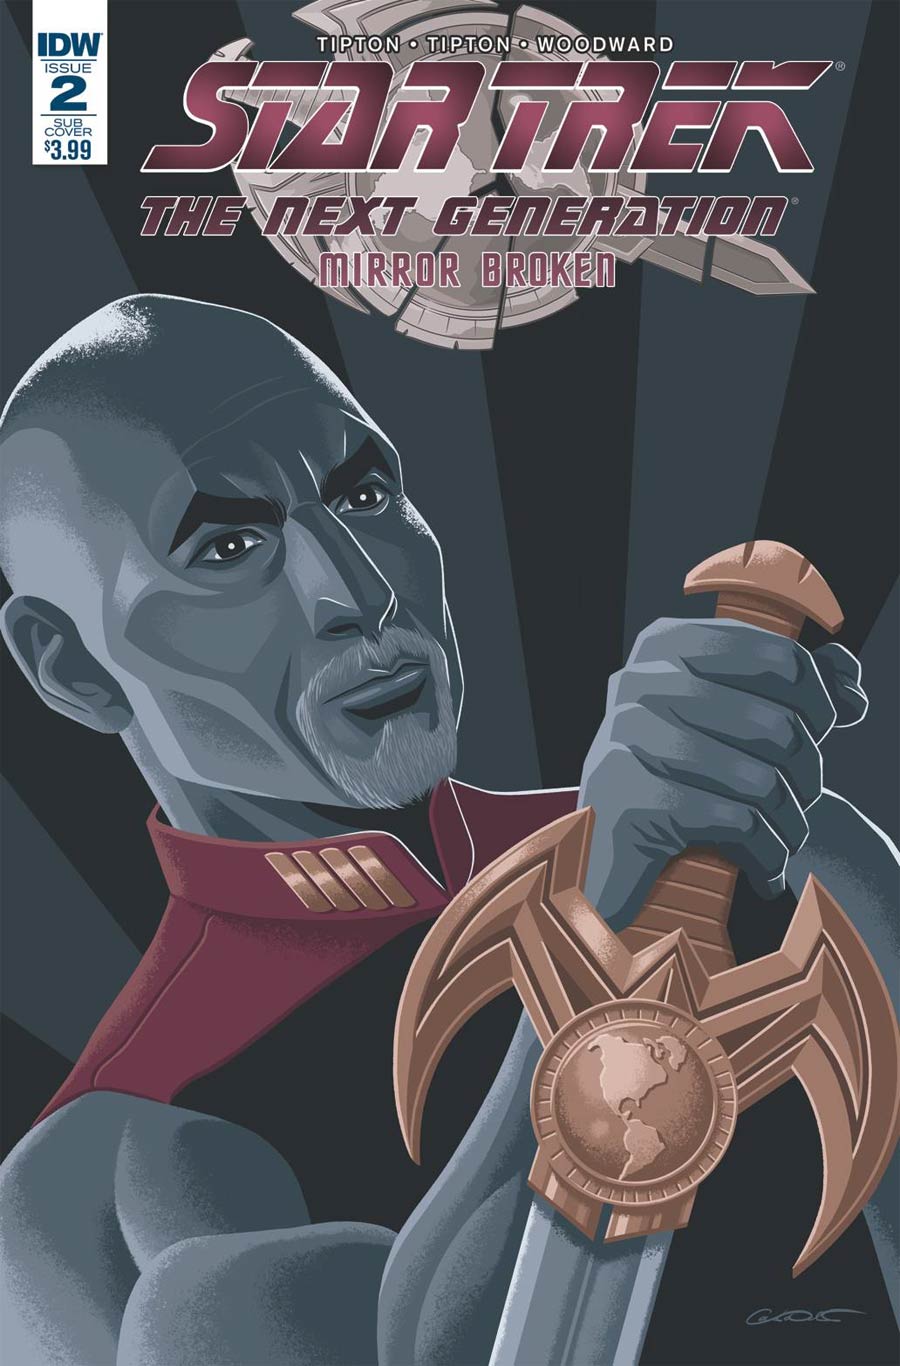 Star Trek The Next Generation Mirror Broken #2 Cover B Variant George Caltsoudas Subscription Cover